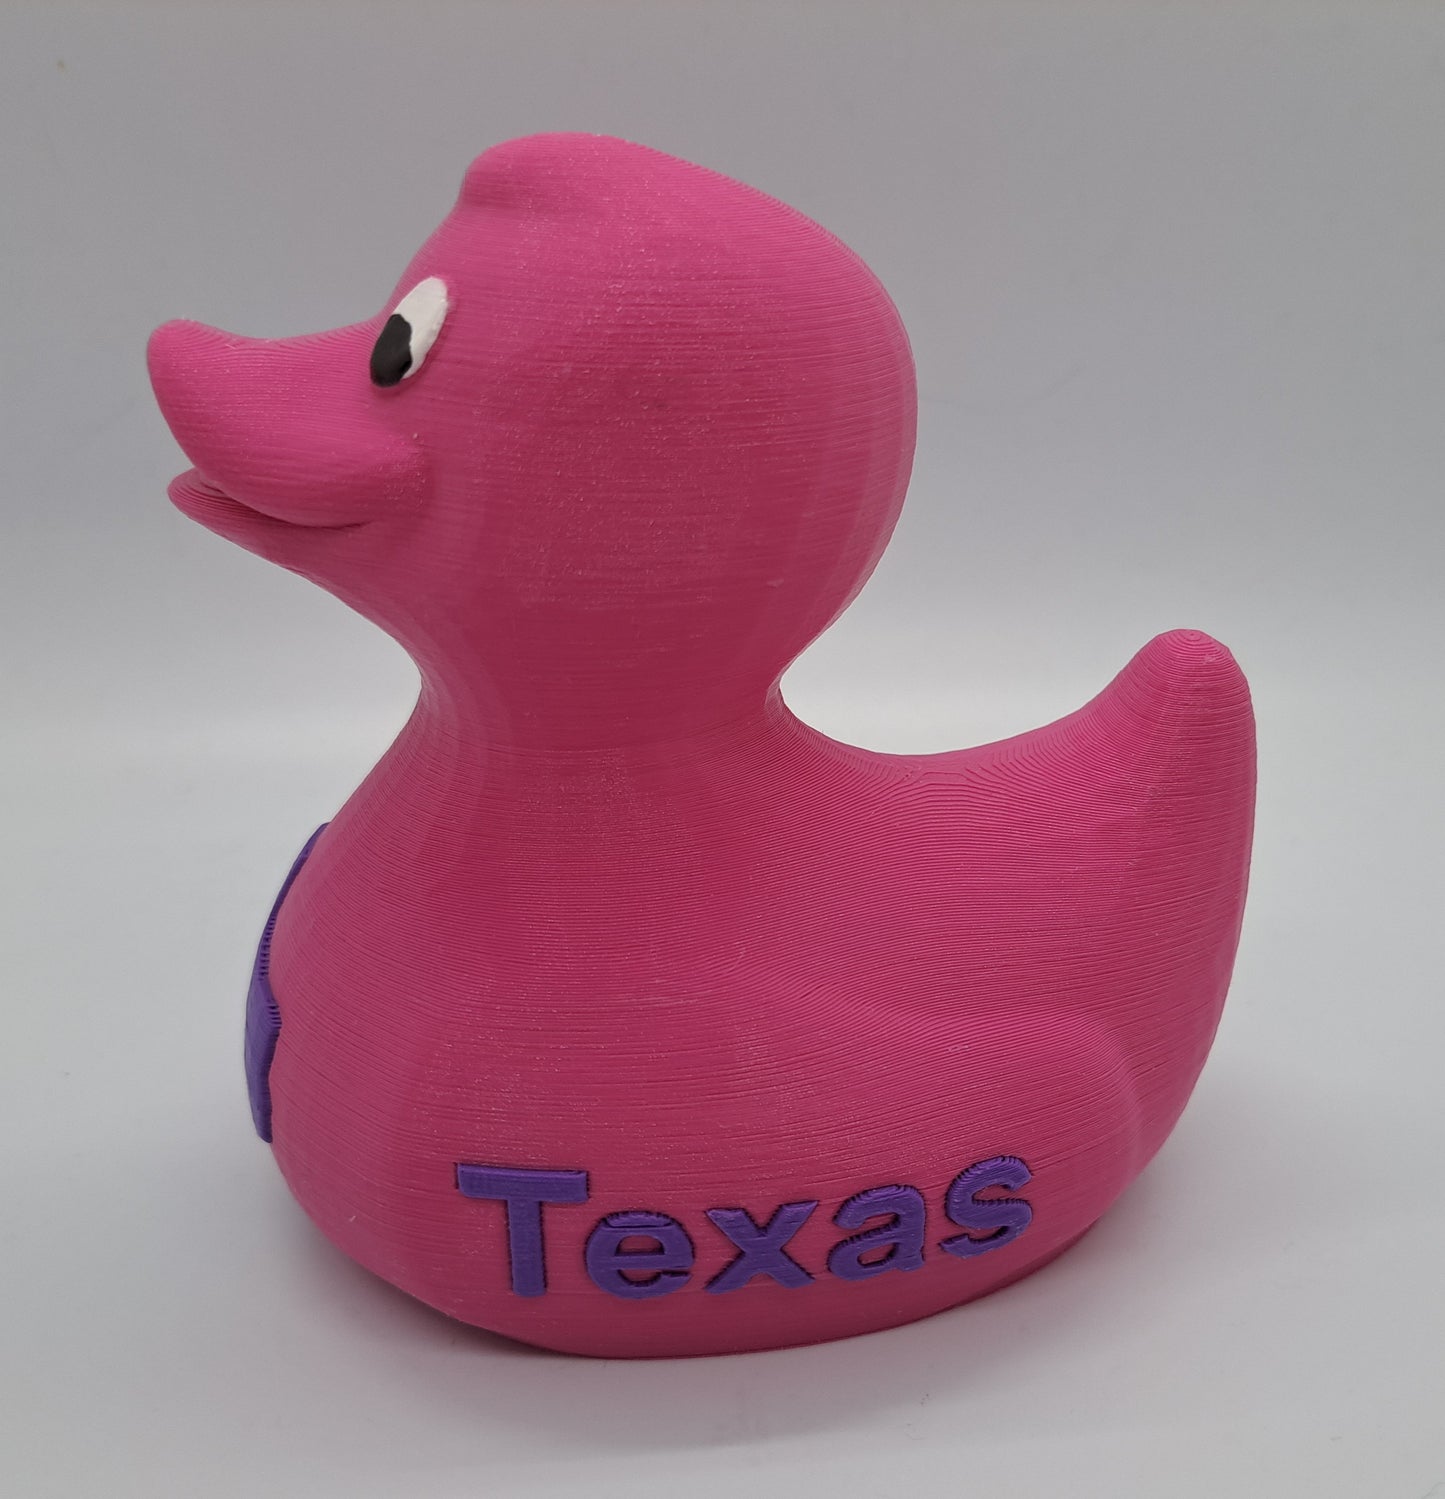 Texas Rubber duck